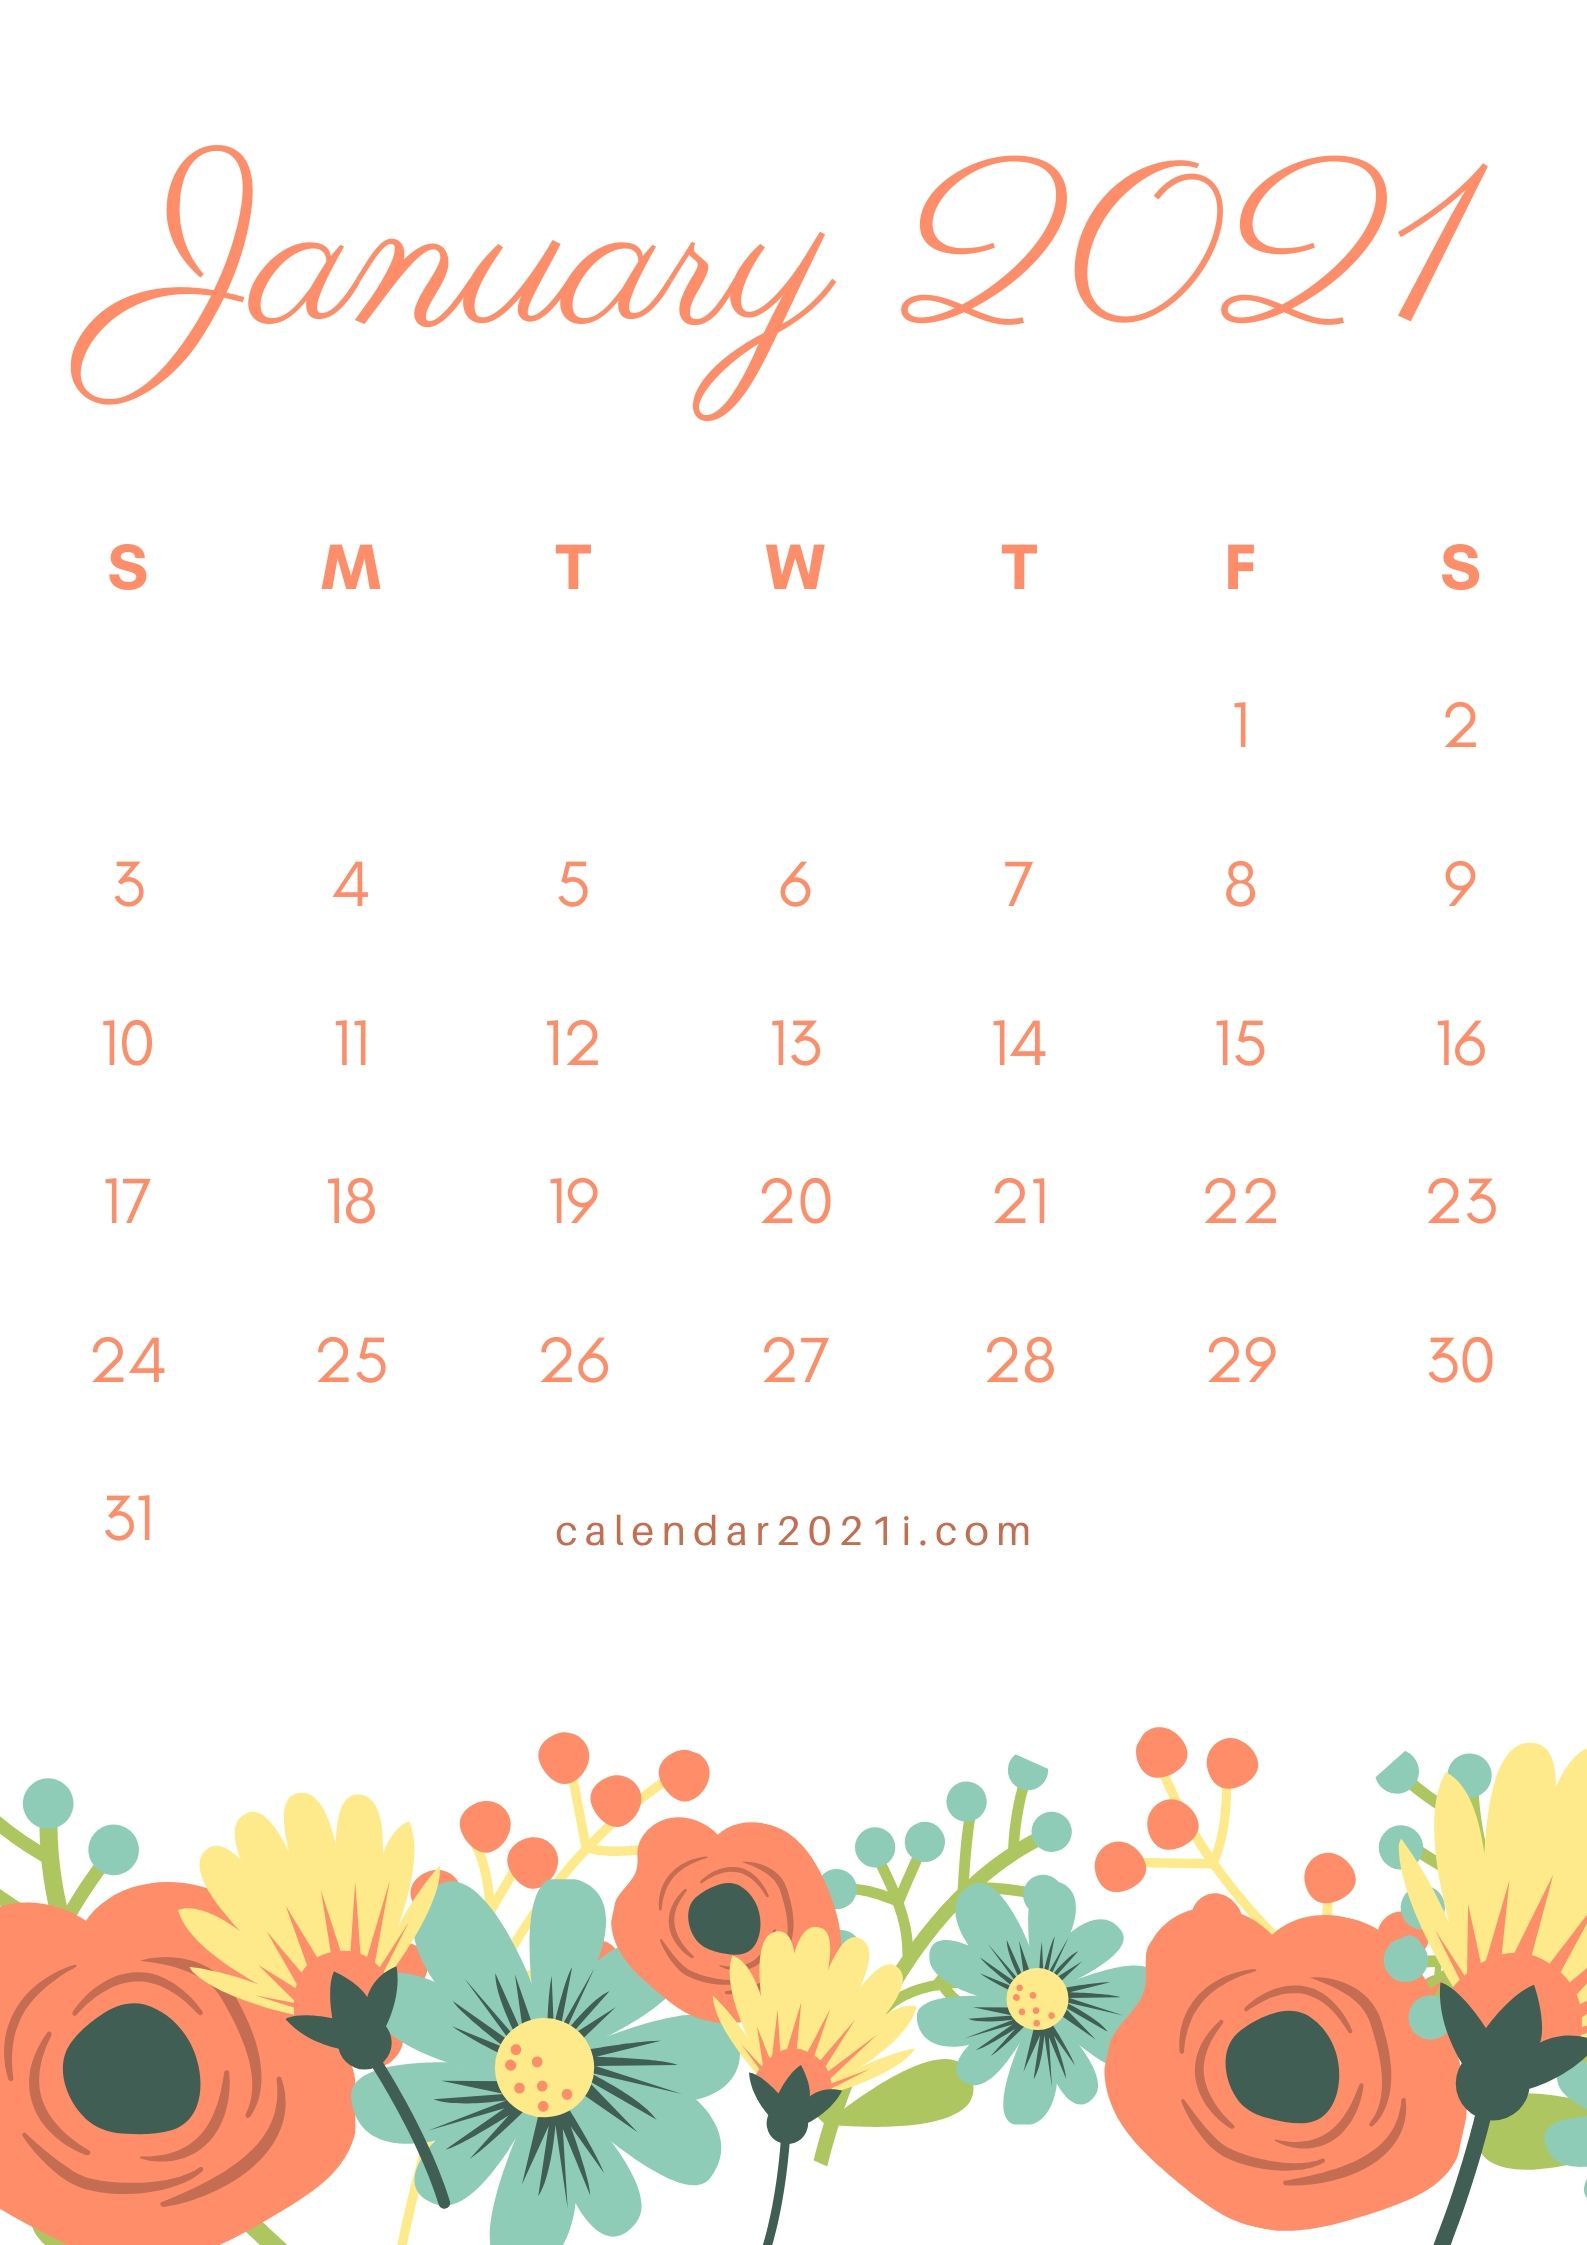 January 2021 Calendar Iphone Wallpaper Image ID 5